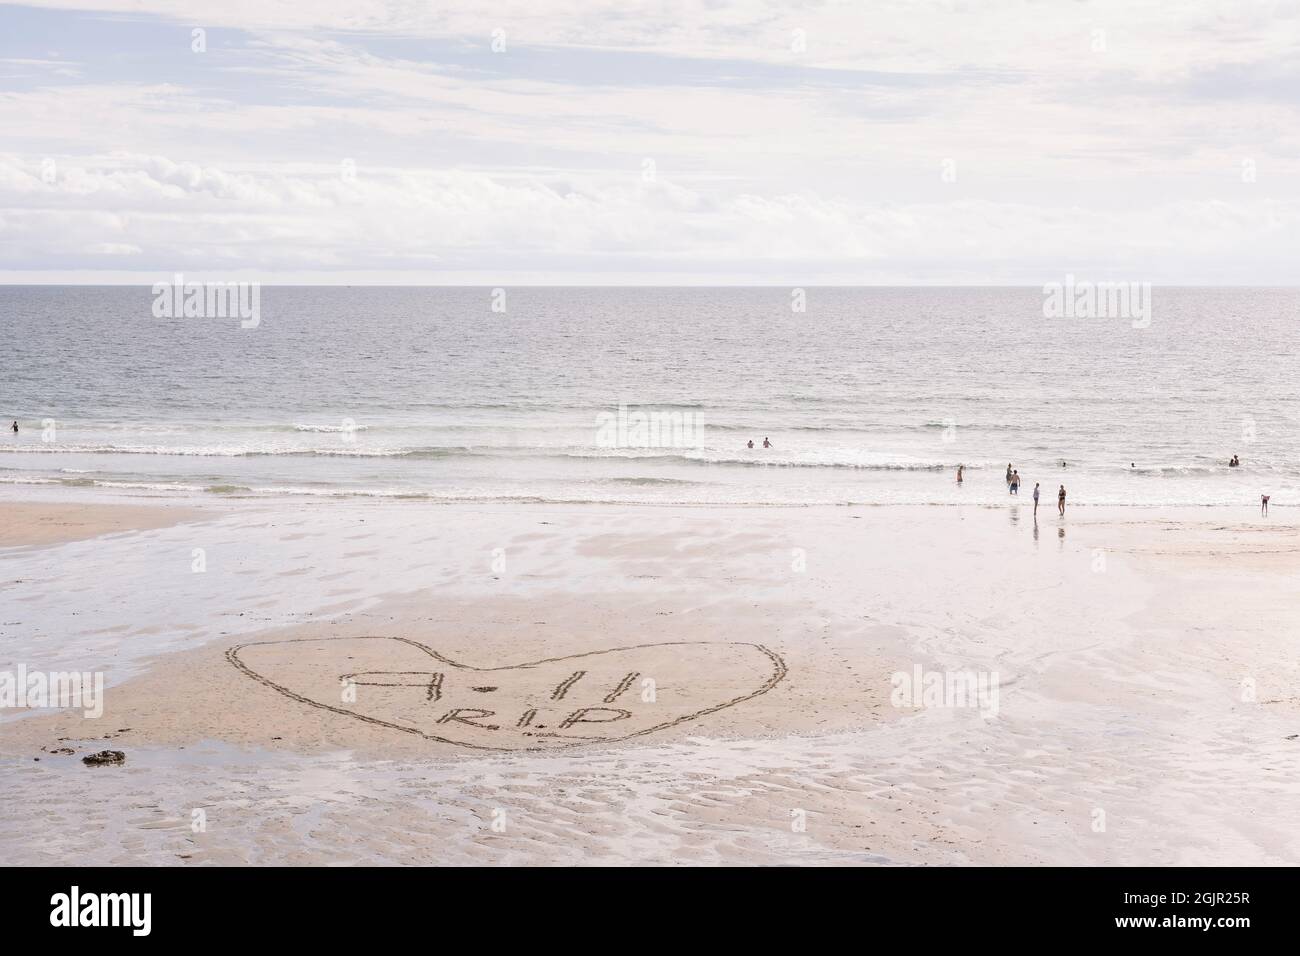 Message in the sand on Perranuthnoe Beach near Penzance, Cornwall to commemorate the 20th anniversary of the tragic 9-11 terrorist attacks on America. Stock Photo